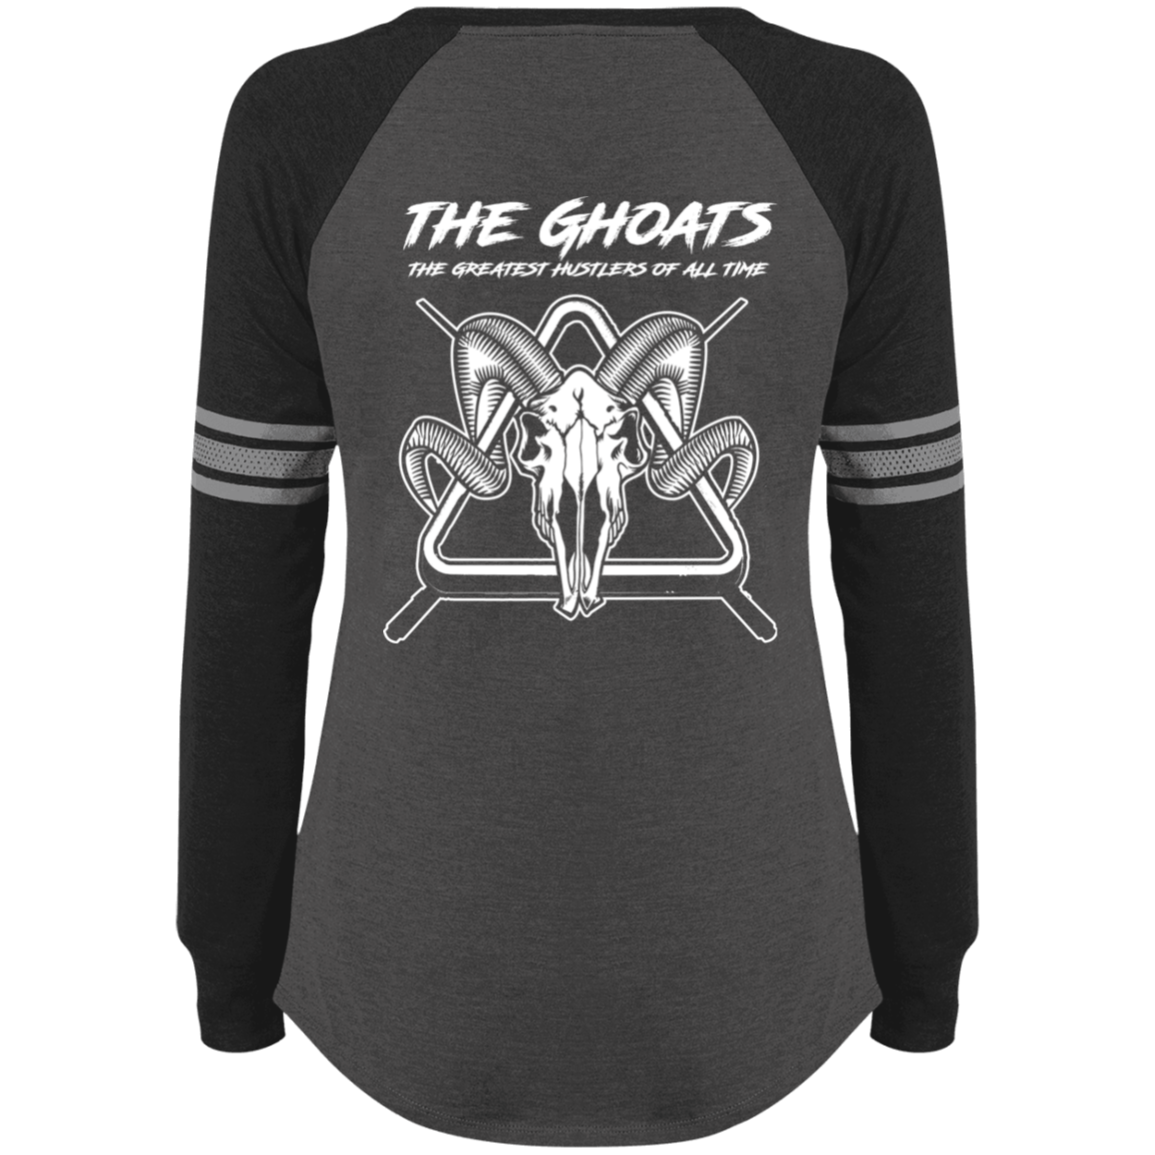 The GHOATS Custom Design #28. Shoot Pool. Ladies' Sports Team Style V-Neck Long Sleeve